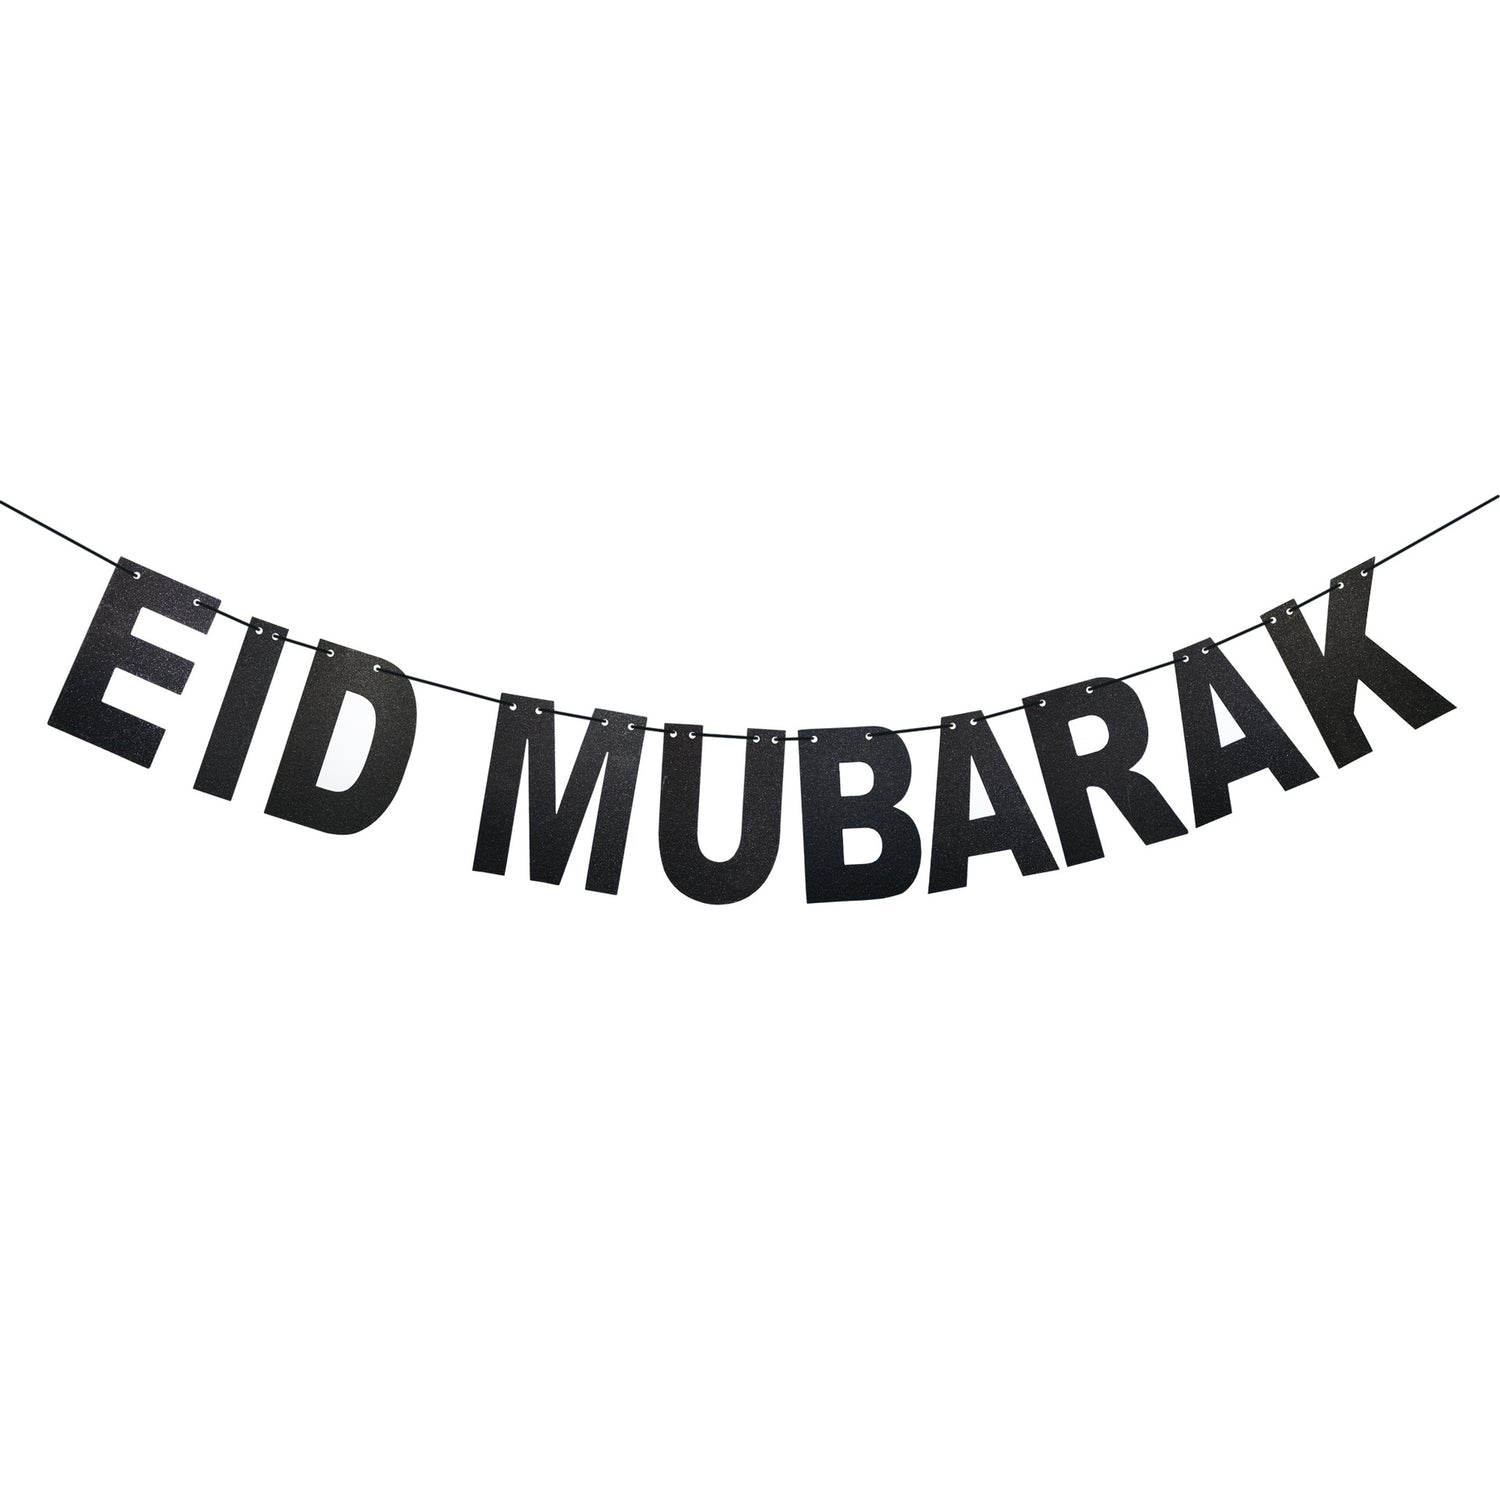 Eid Banners